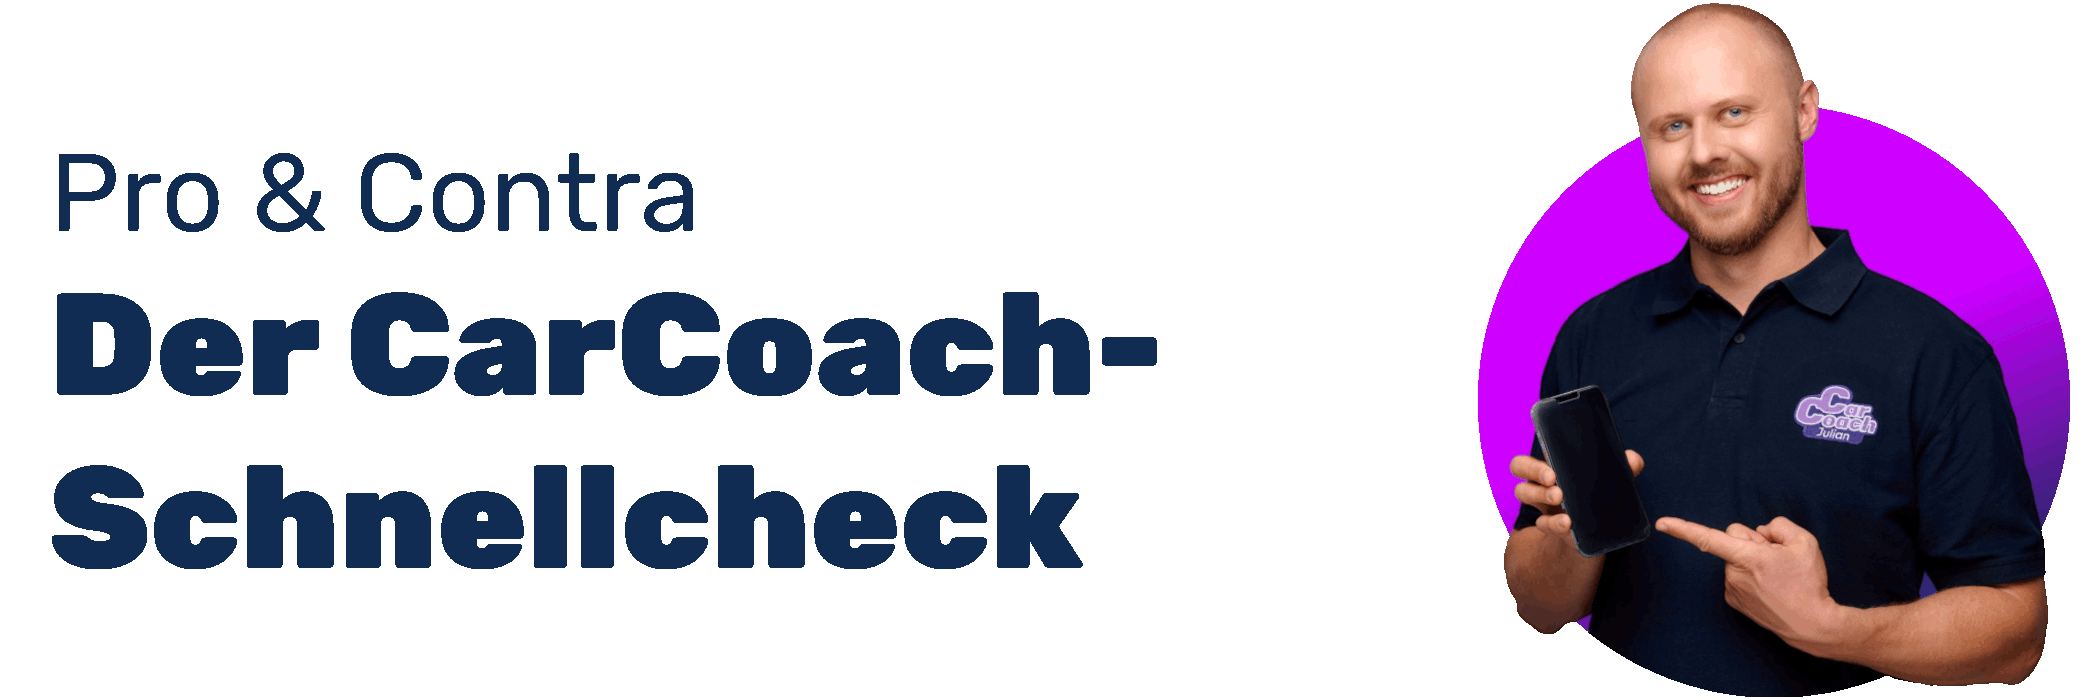 Testberichte - CarCoach-Schnellcheck - Pro & Contra - Julian